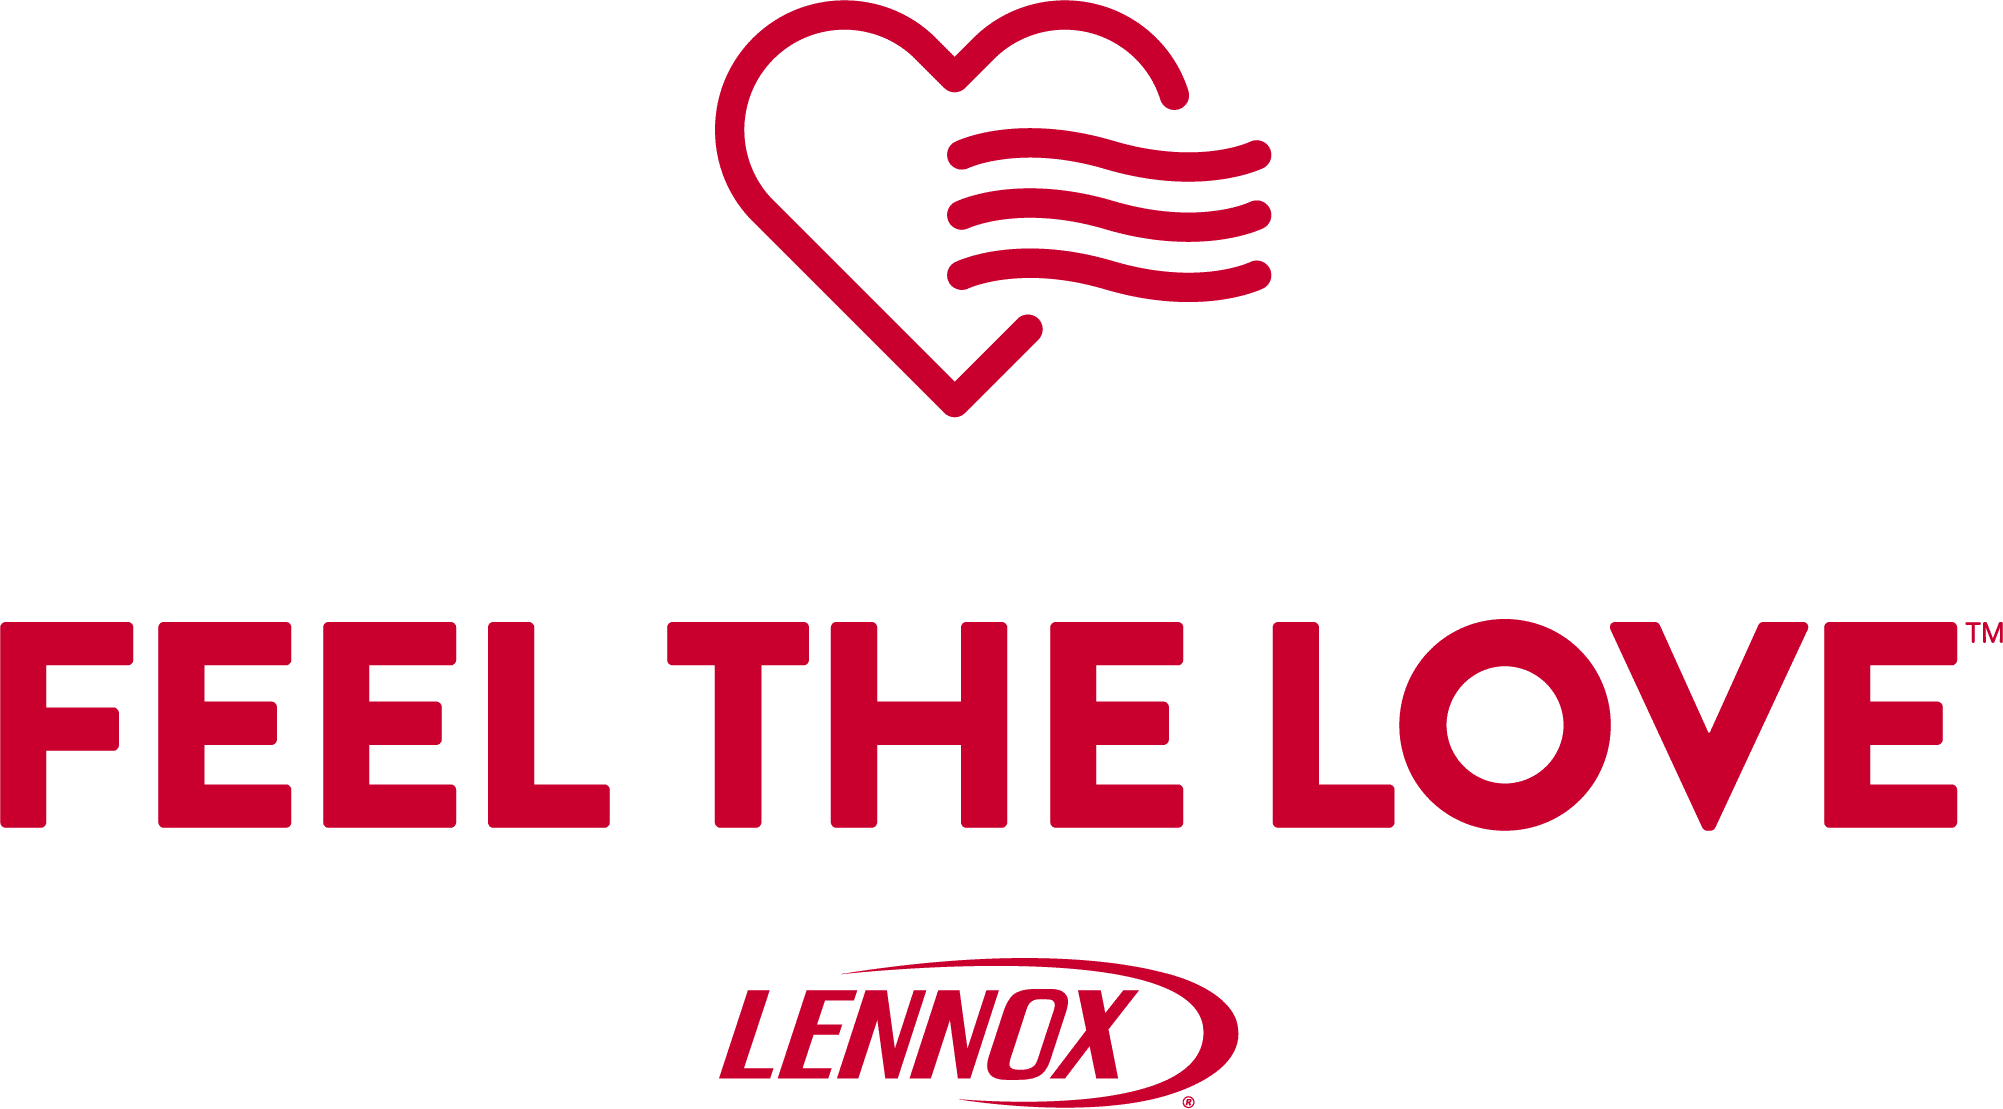 feel the love and Lennox partnership logo